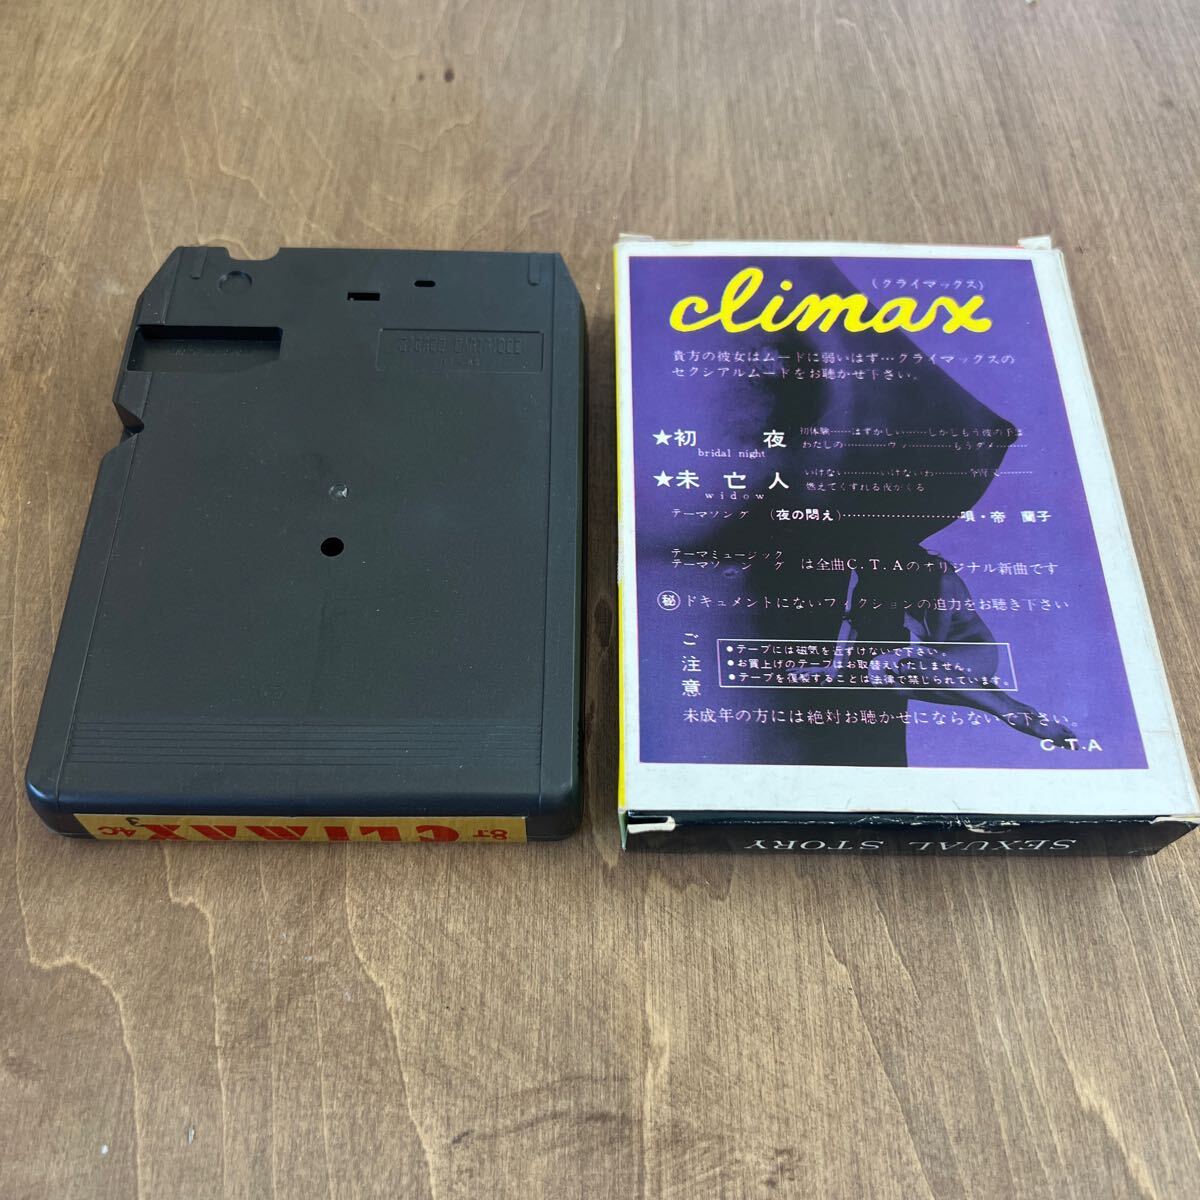 C1■8トラックテープ CLIMAX CAR Stereo クライマックス 初夜 未亡人 帝蘭子 c.t.a セクシアルムードの画像6